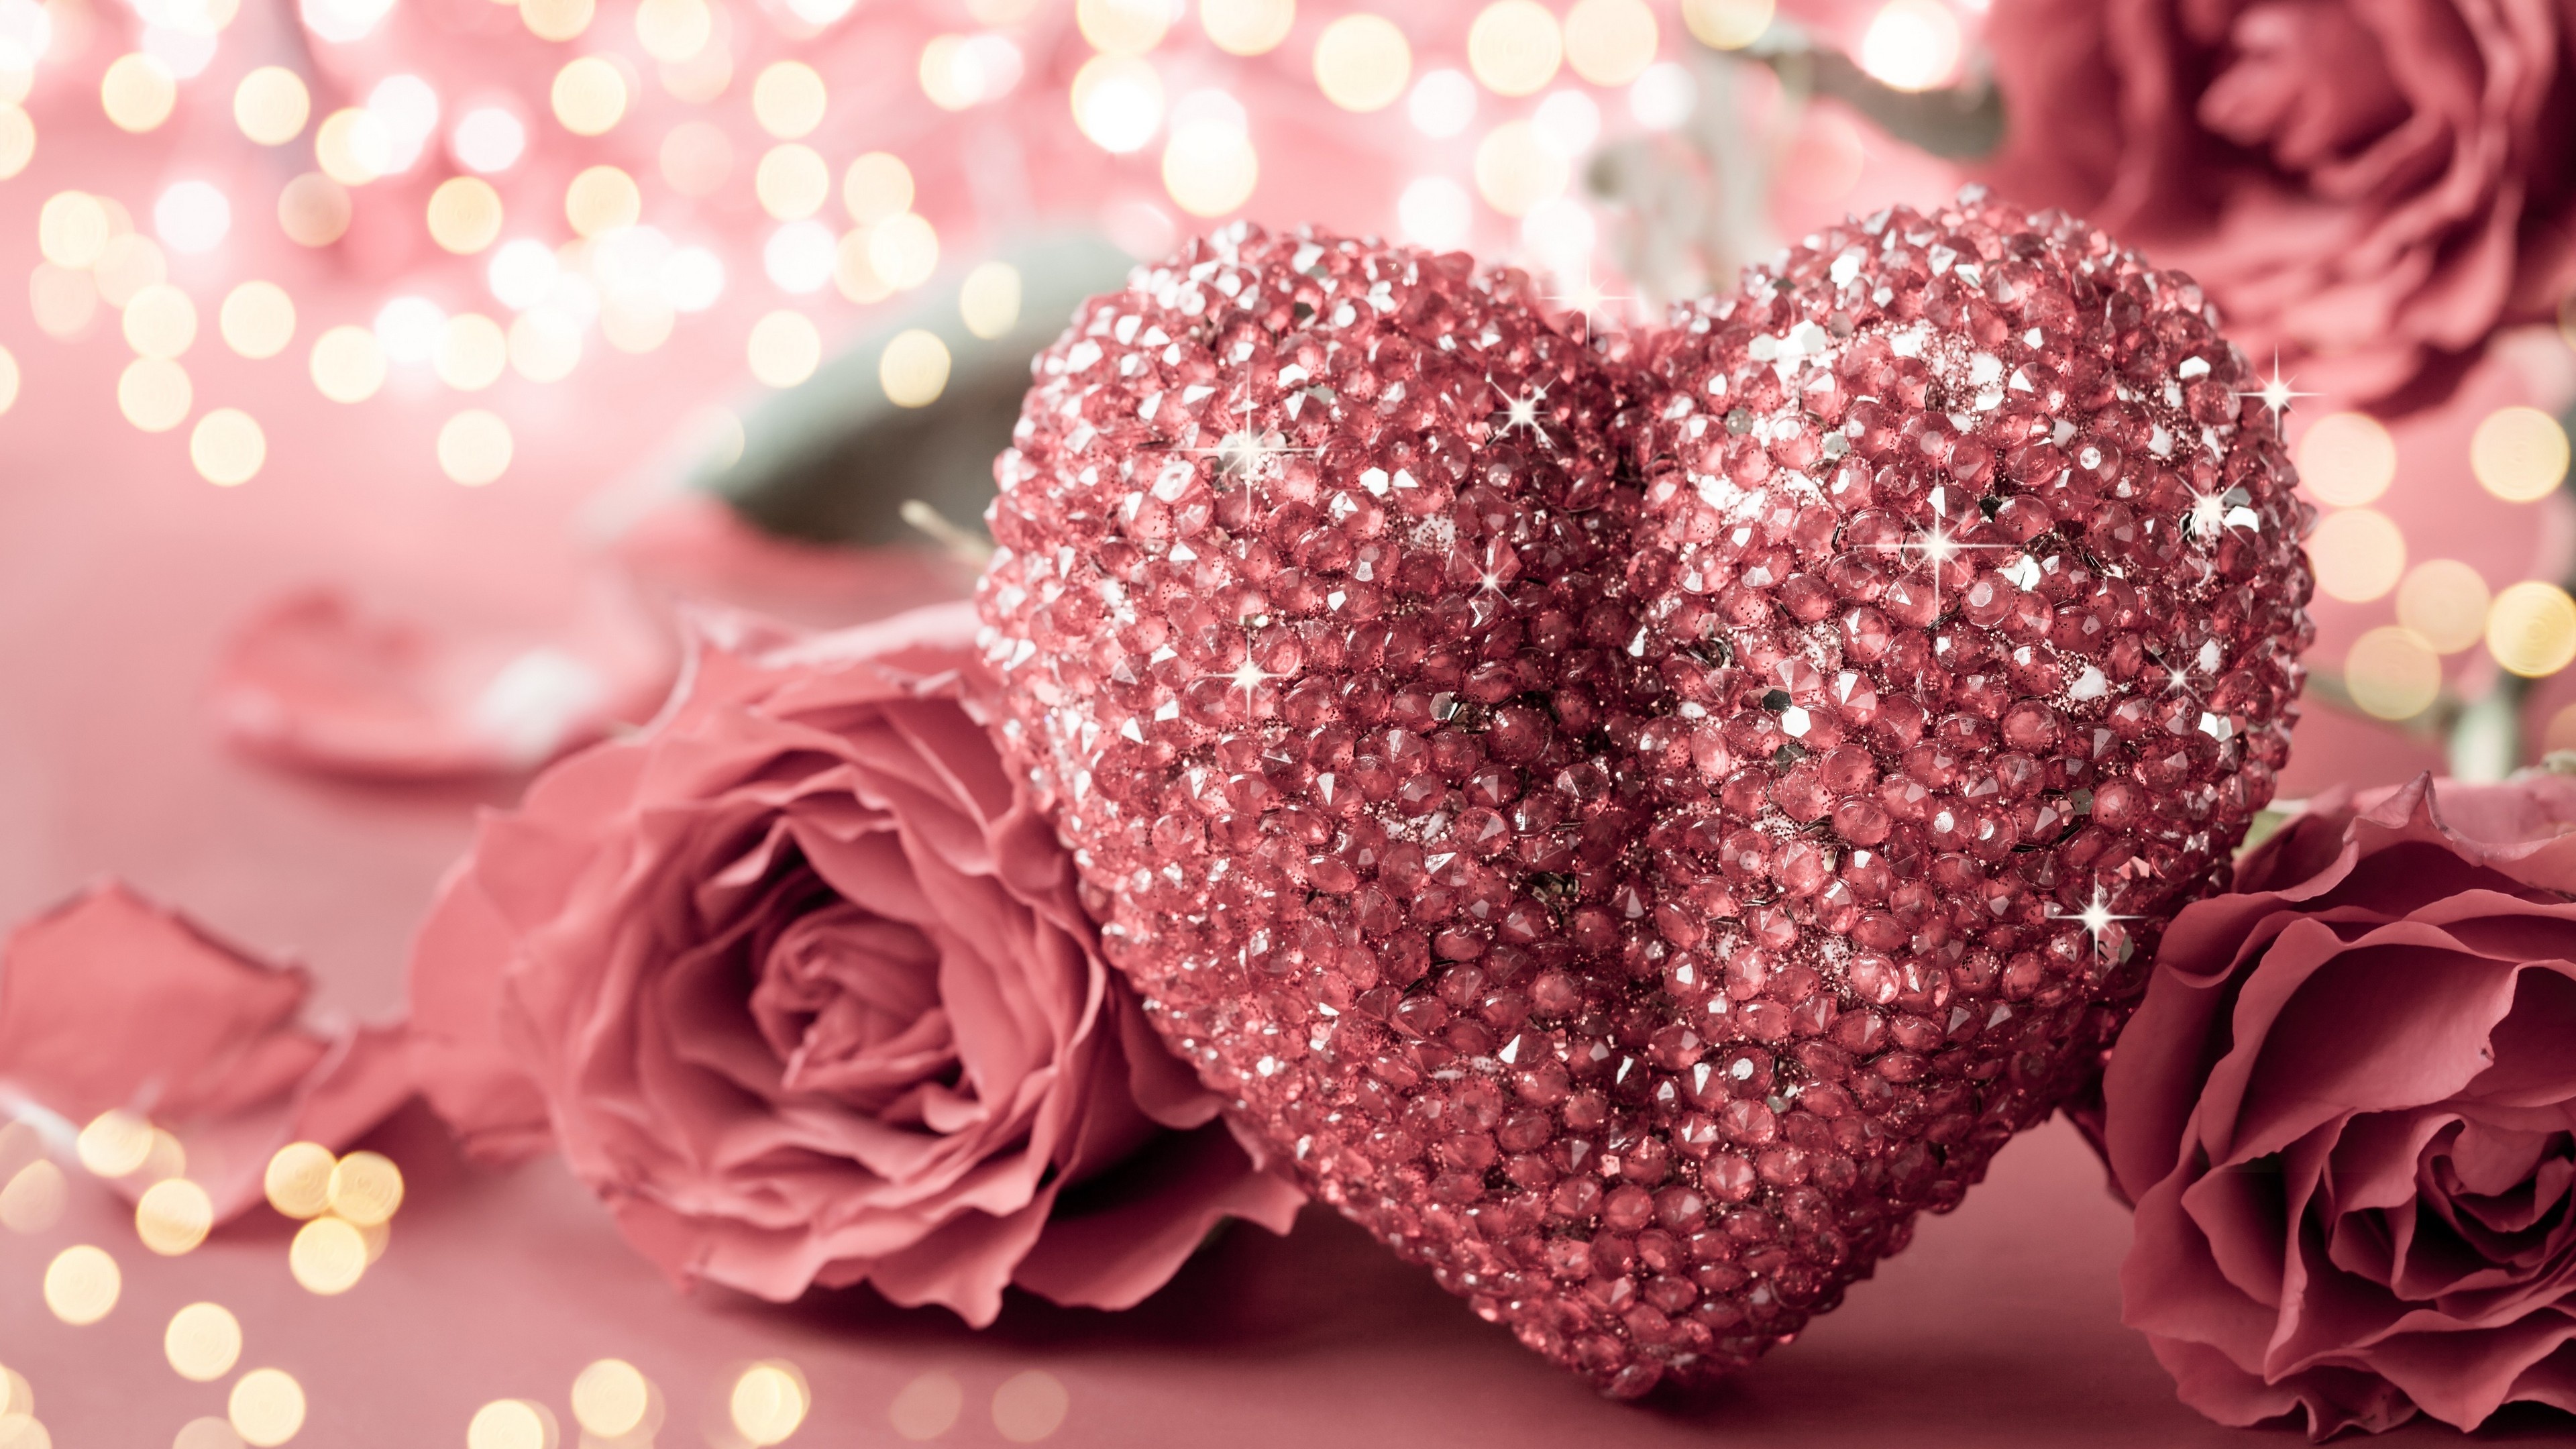 Hearts and Flowers, Romantic wallpapers, Love and beauty, Floral arrangements, 3840x2160 4K Desktop